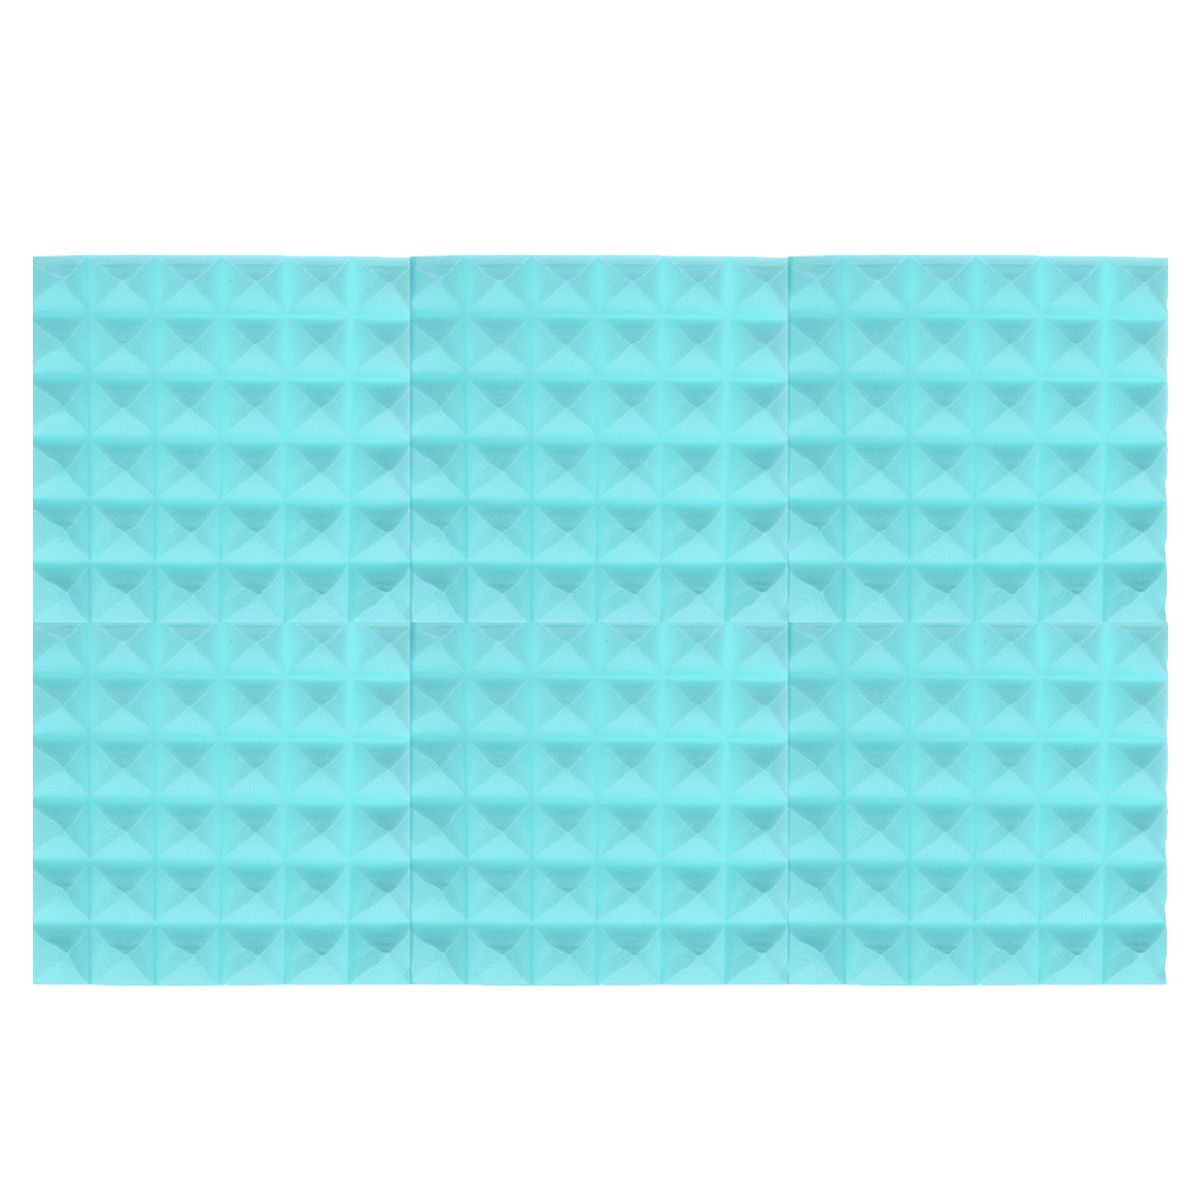 6Pcs-Acoustic-Panels-Tiles-Studio-Soundproofing-Insulation-Closed-Cell-Foam-1761605